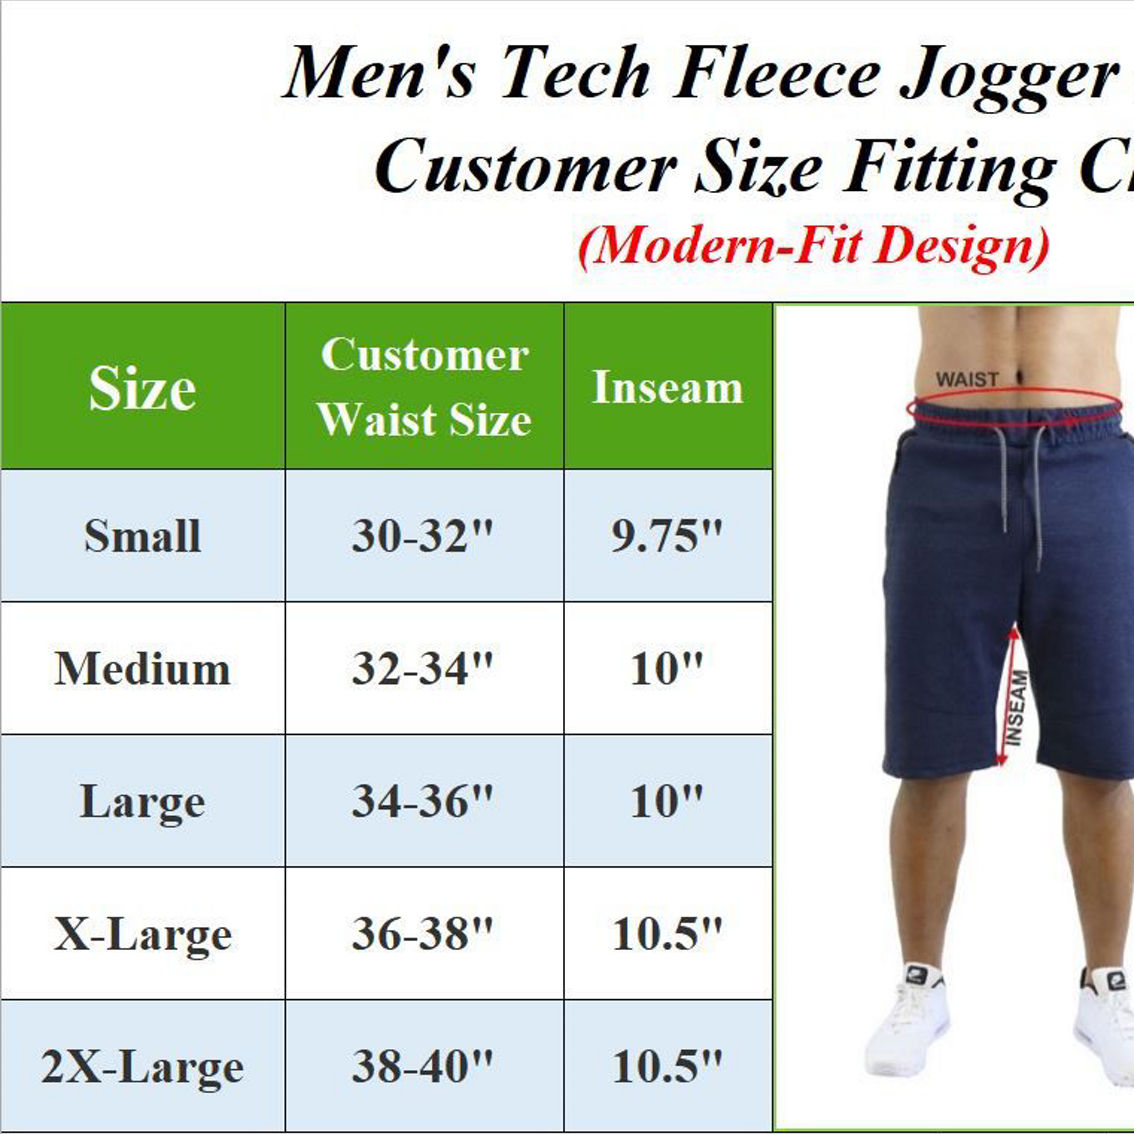 Men's Tech Fleece Performance Shorts With Heat Seal Zipper Pocket - Image 4 of 4